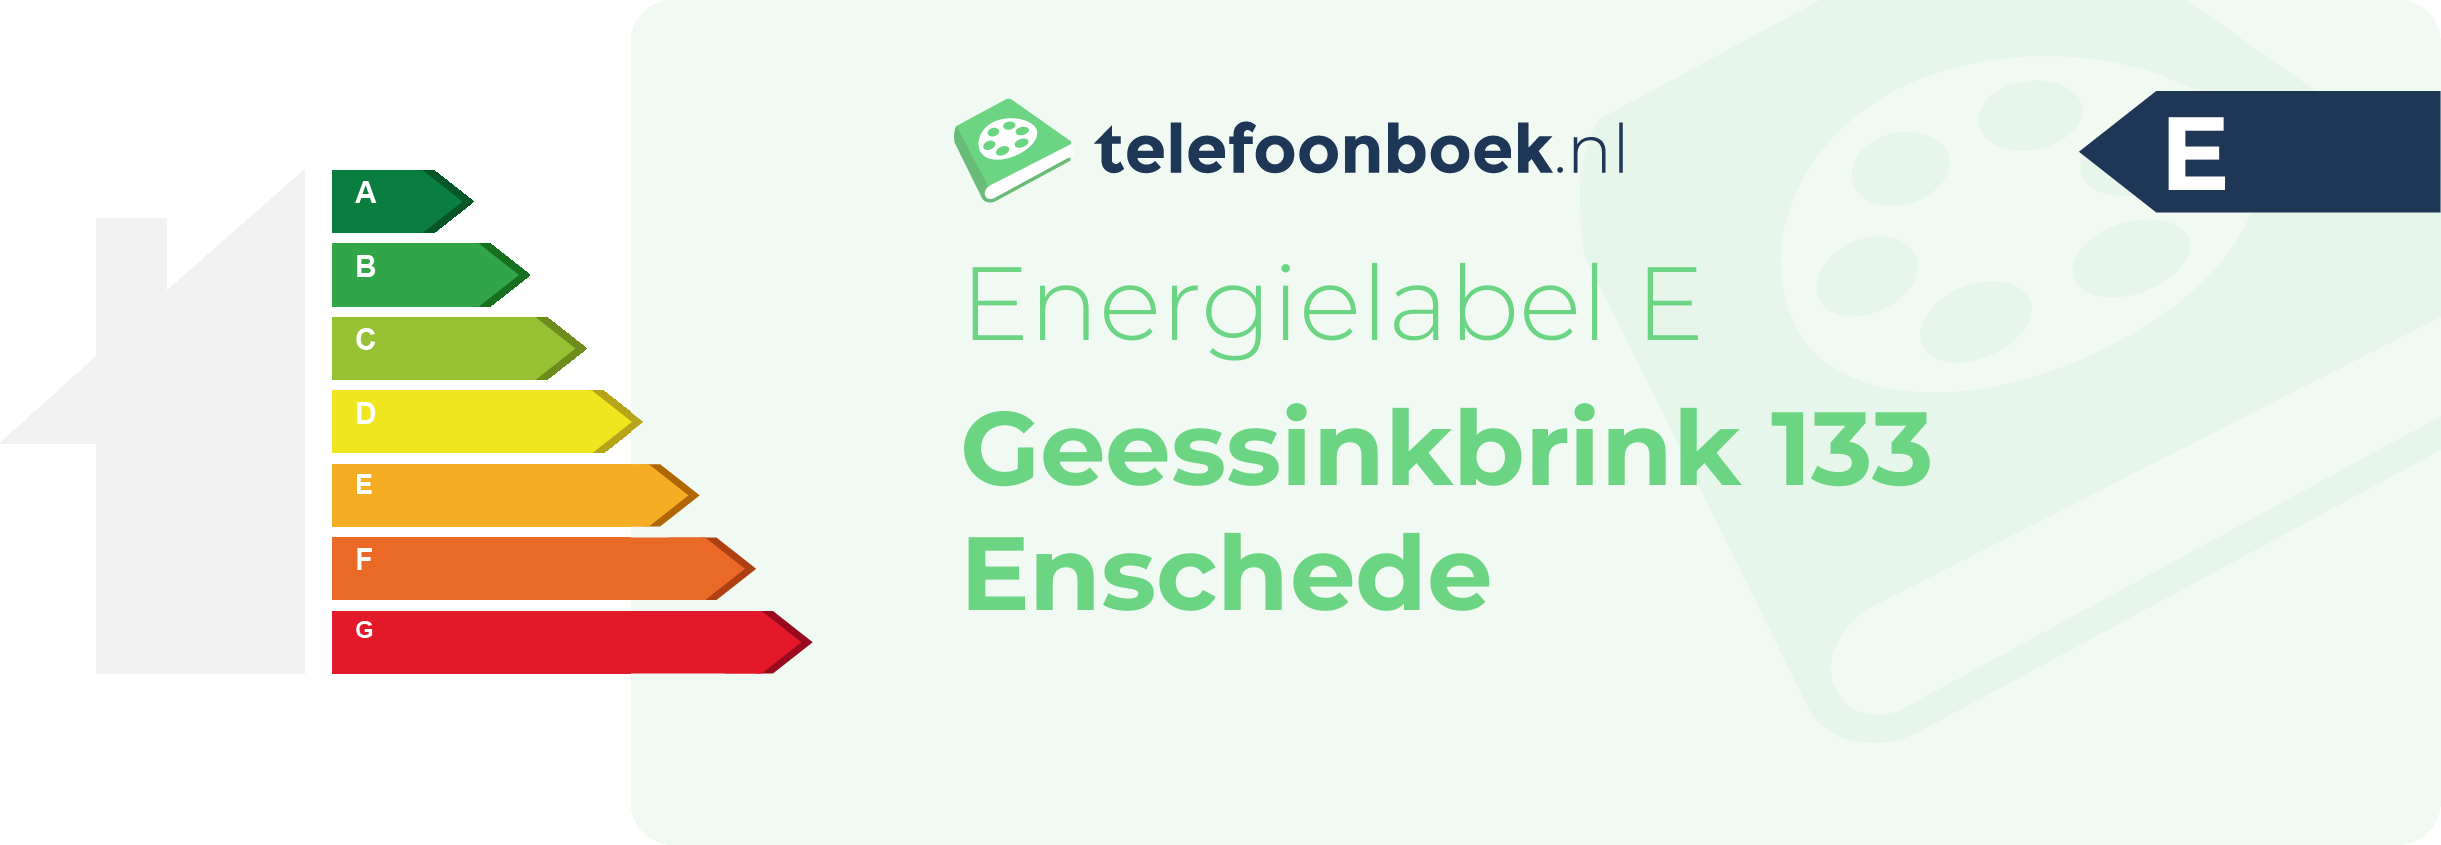 Energielabel Geessinkbrink 133 Enschede